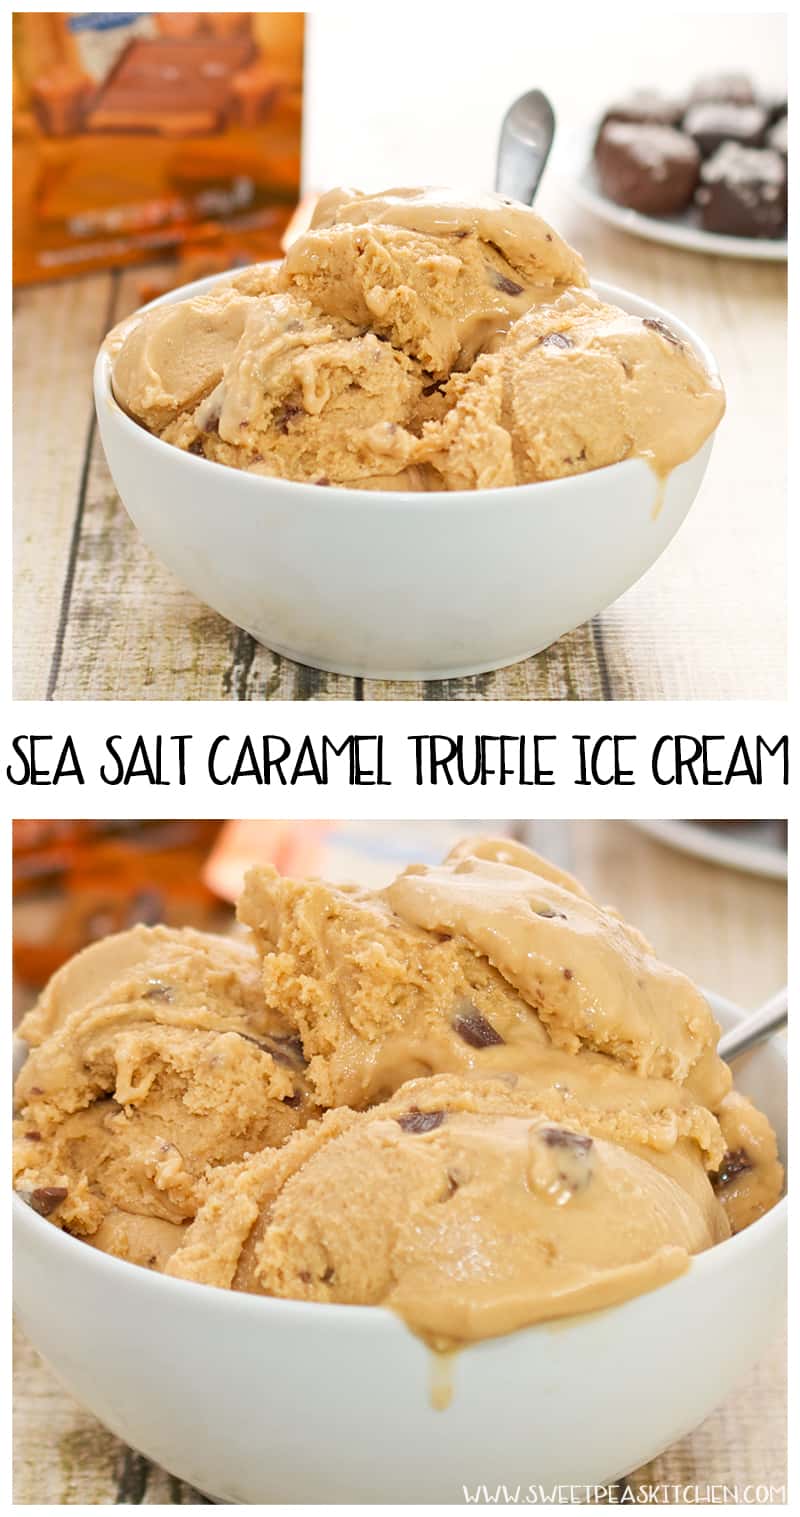  Sea Salt Caramel Truffle Ice Cream in a white bowl